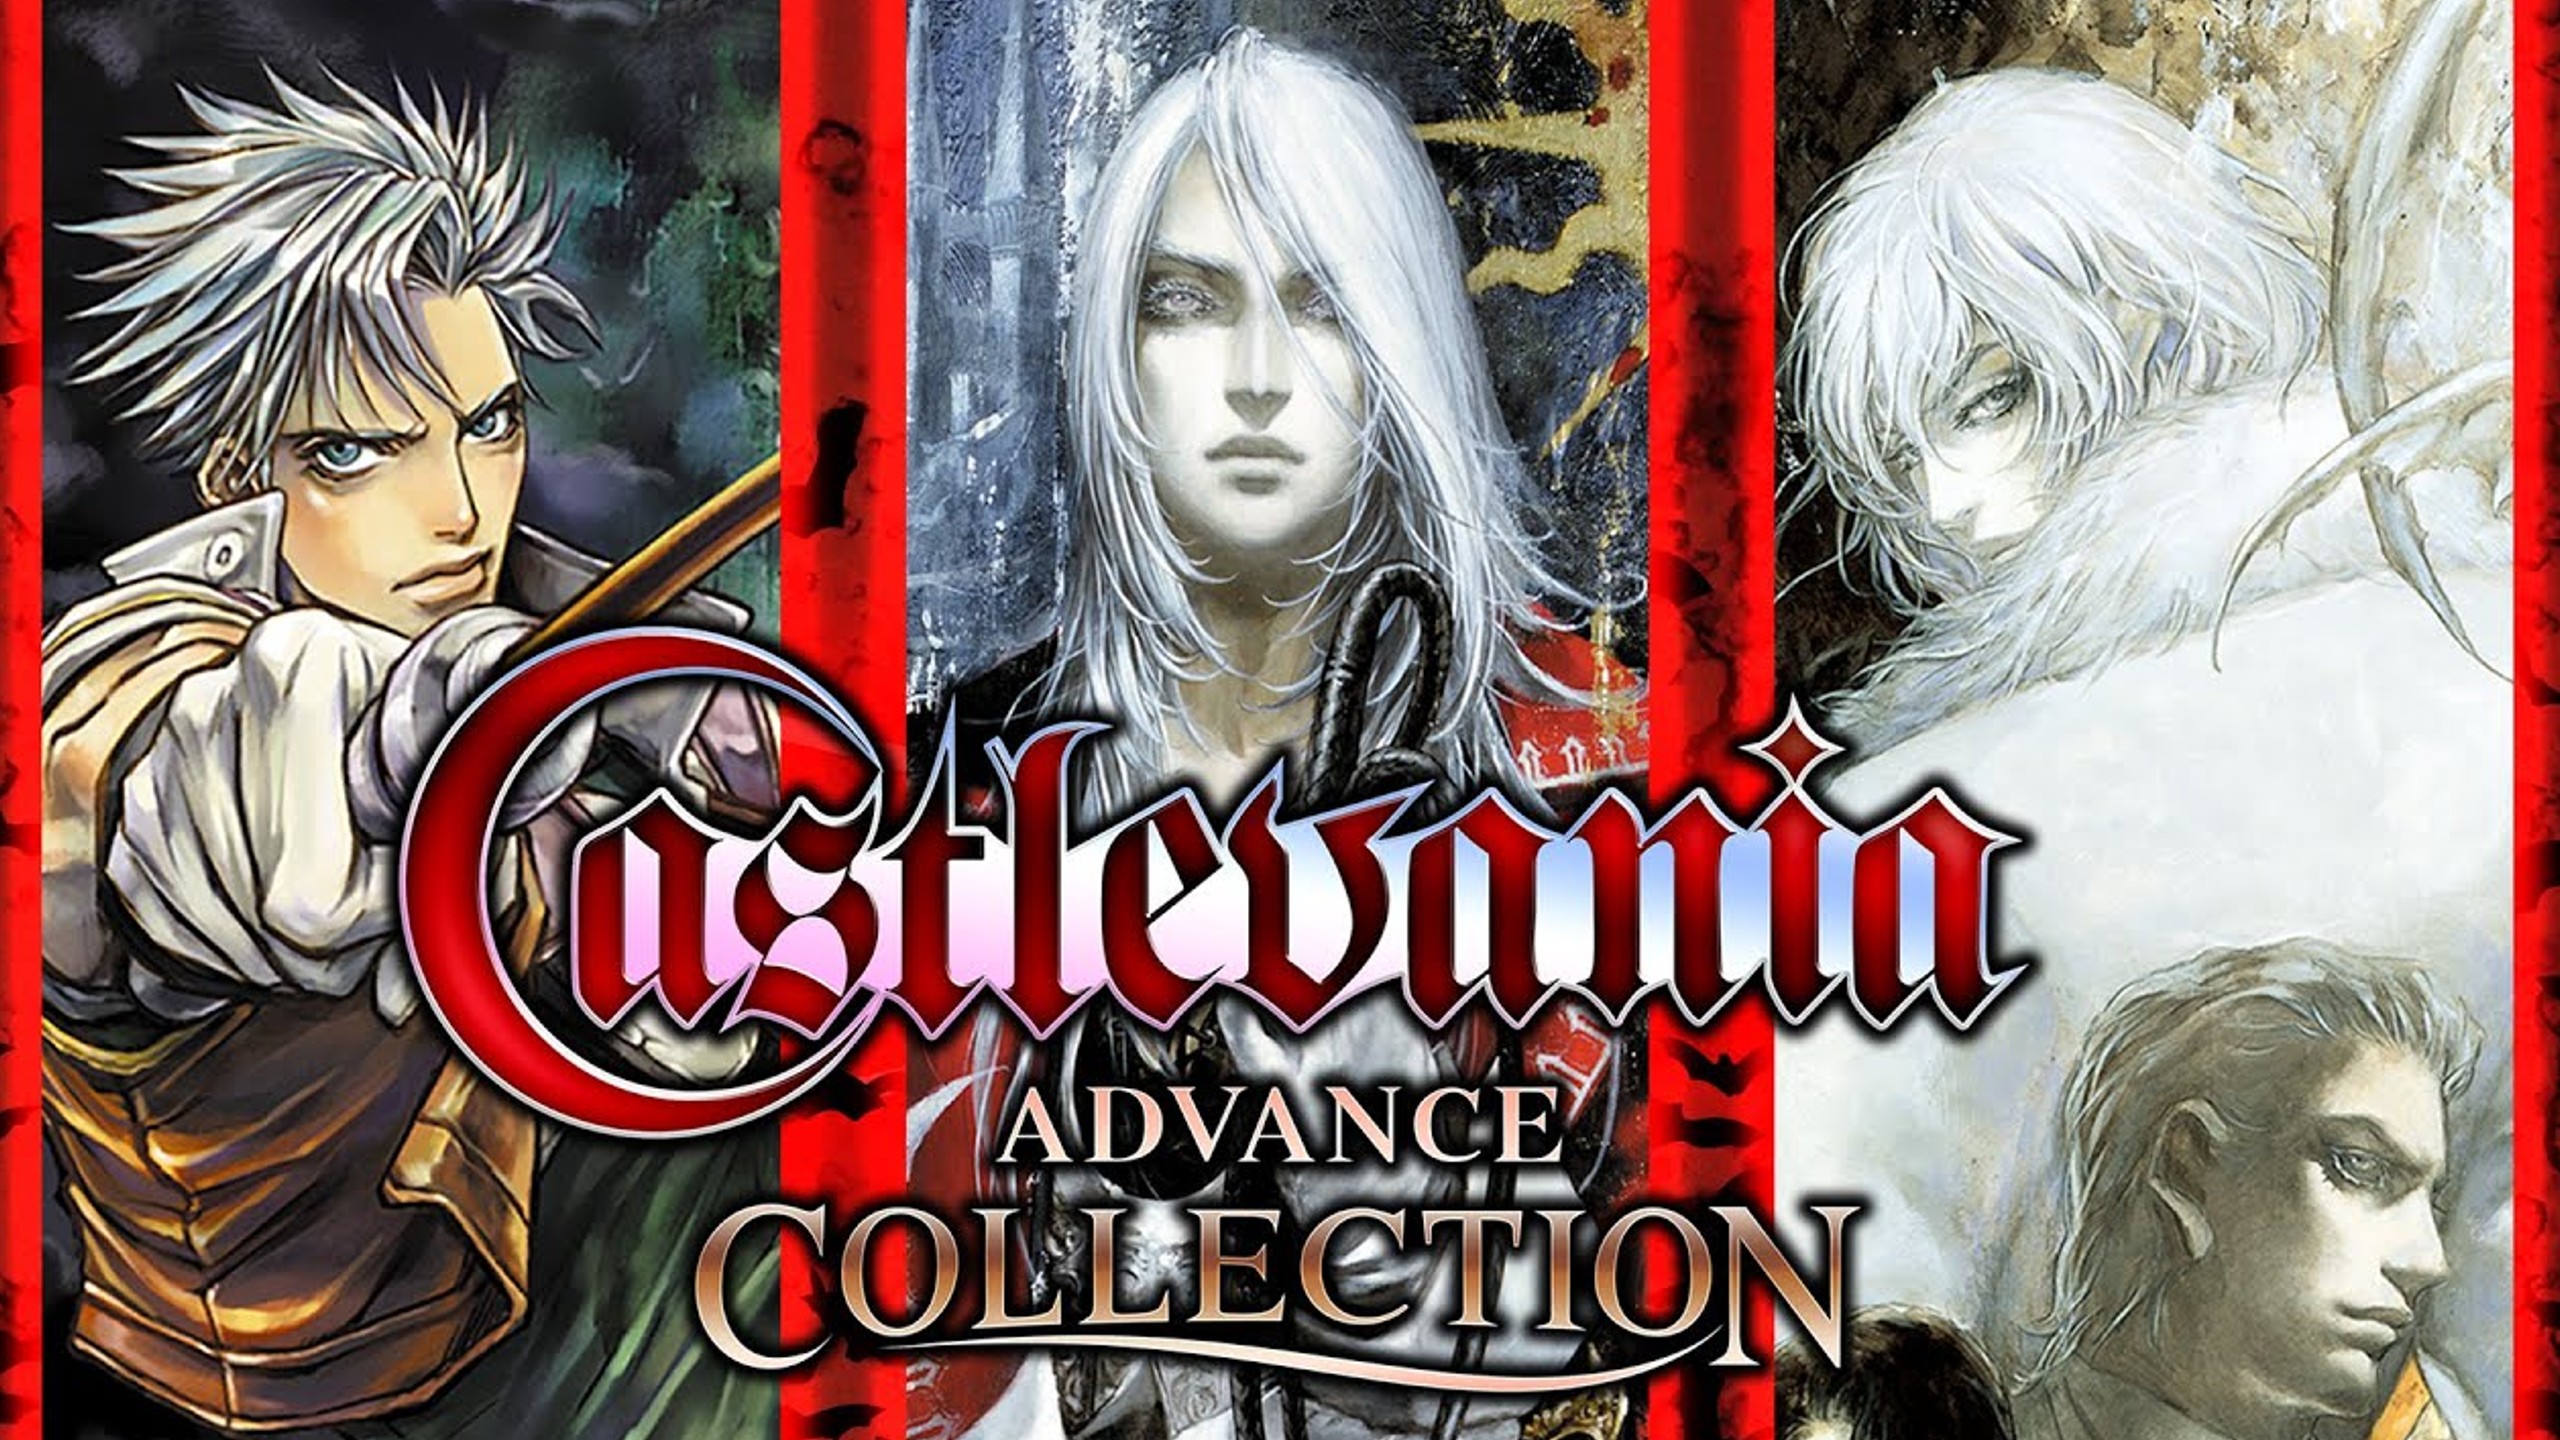 Advance collection. Castlevania Advance collection game. Castlevania Advance collection Switch. Castlevania Advance collection physical. Castlevania Advance collection [NSP].